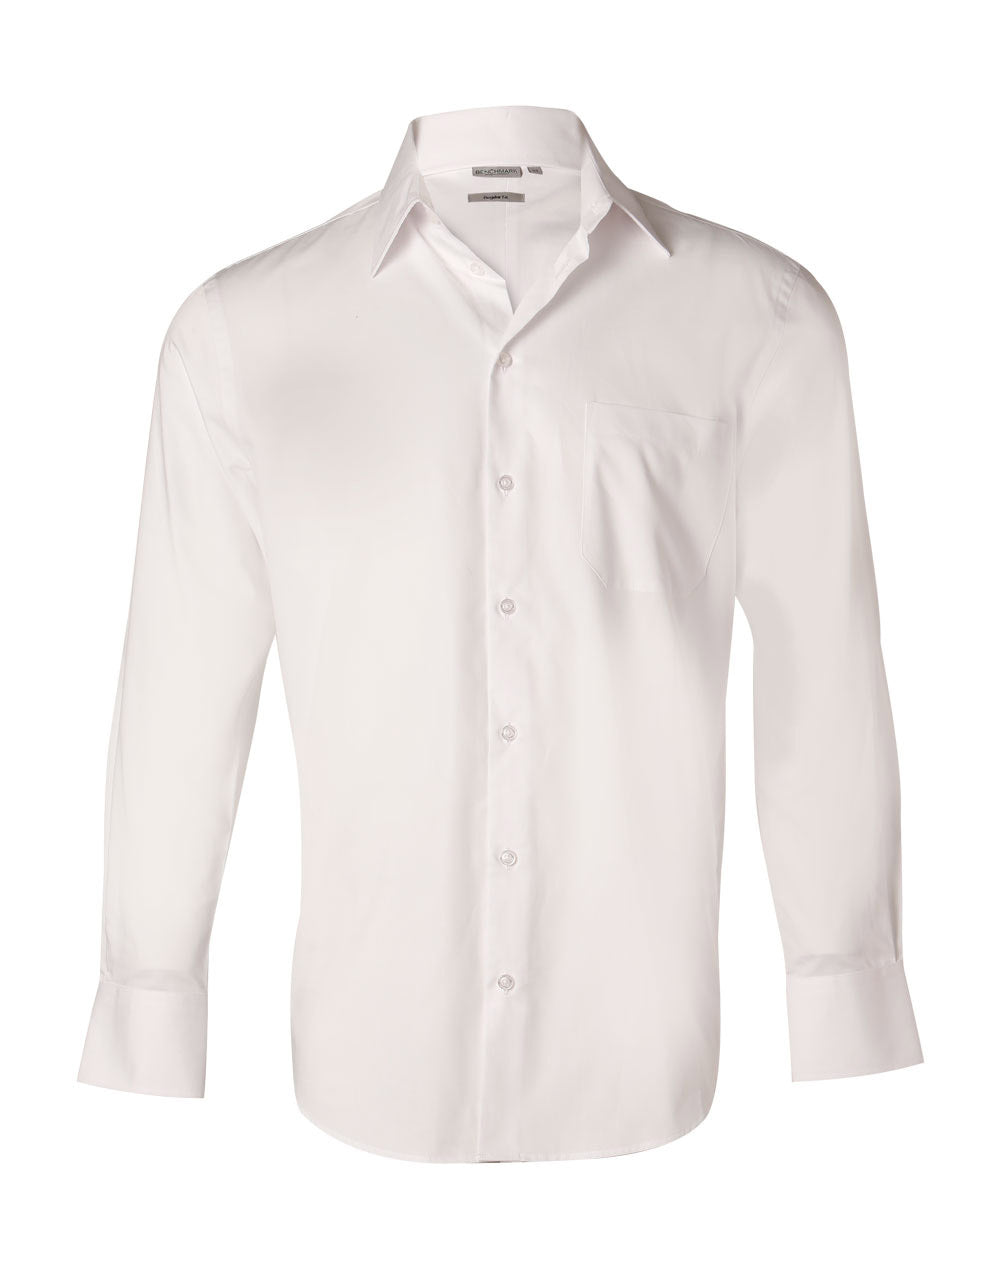 Benchmark M7030L Men's Fine Twill Long Sleeve Shirt